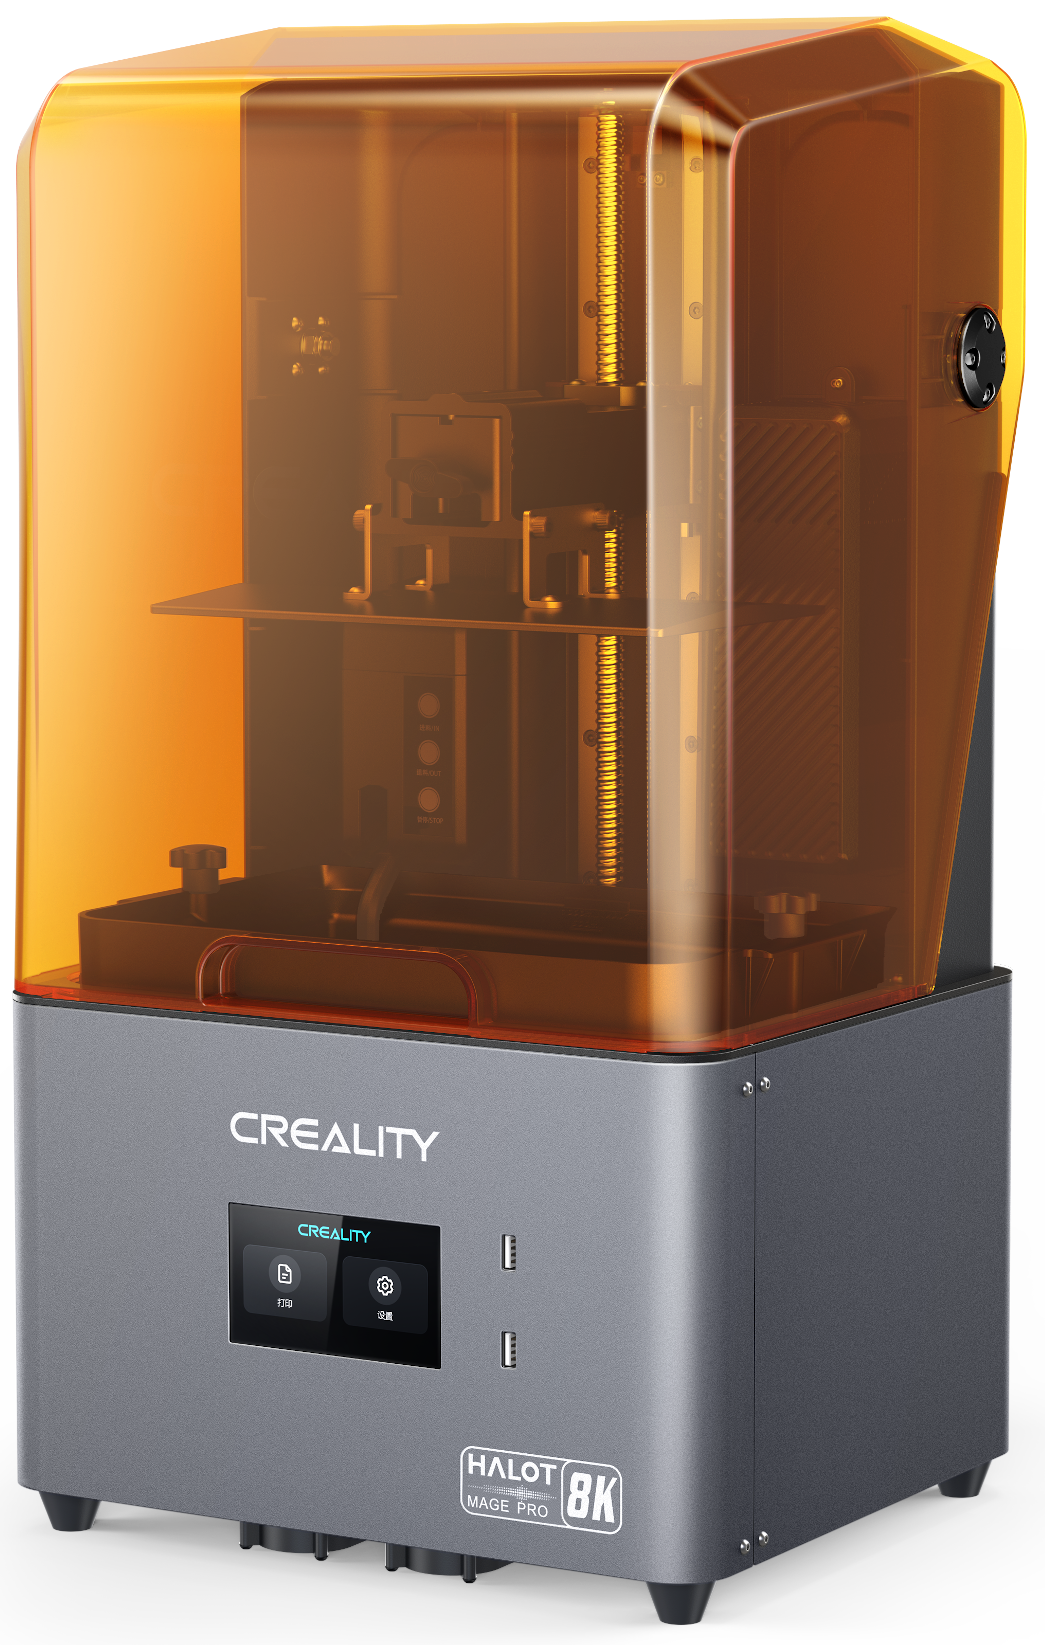 Creality Halot-Mage Pro CL-103